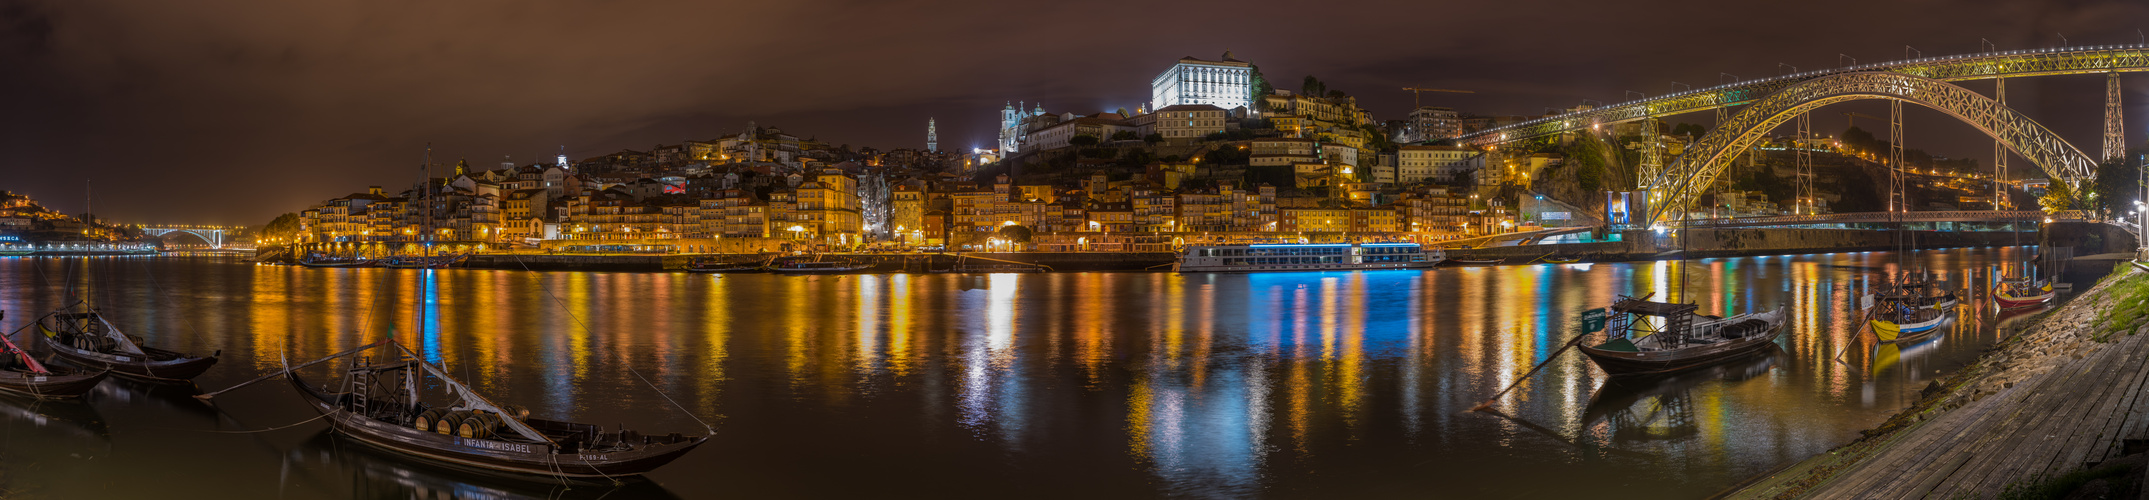 One night in Porto...